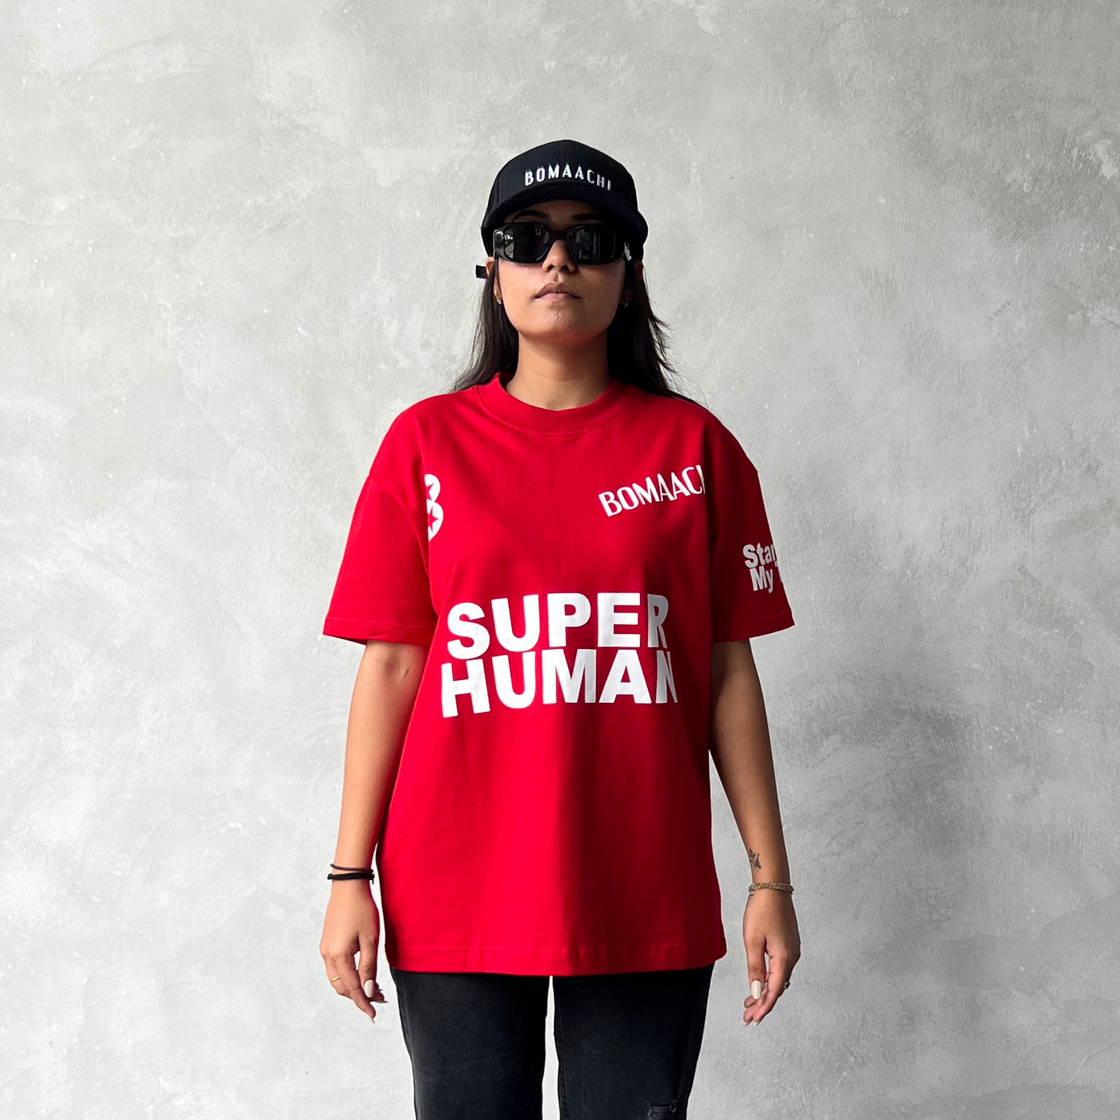 Super Human Red T-shirt